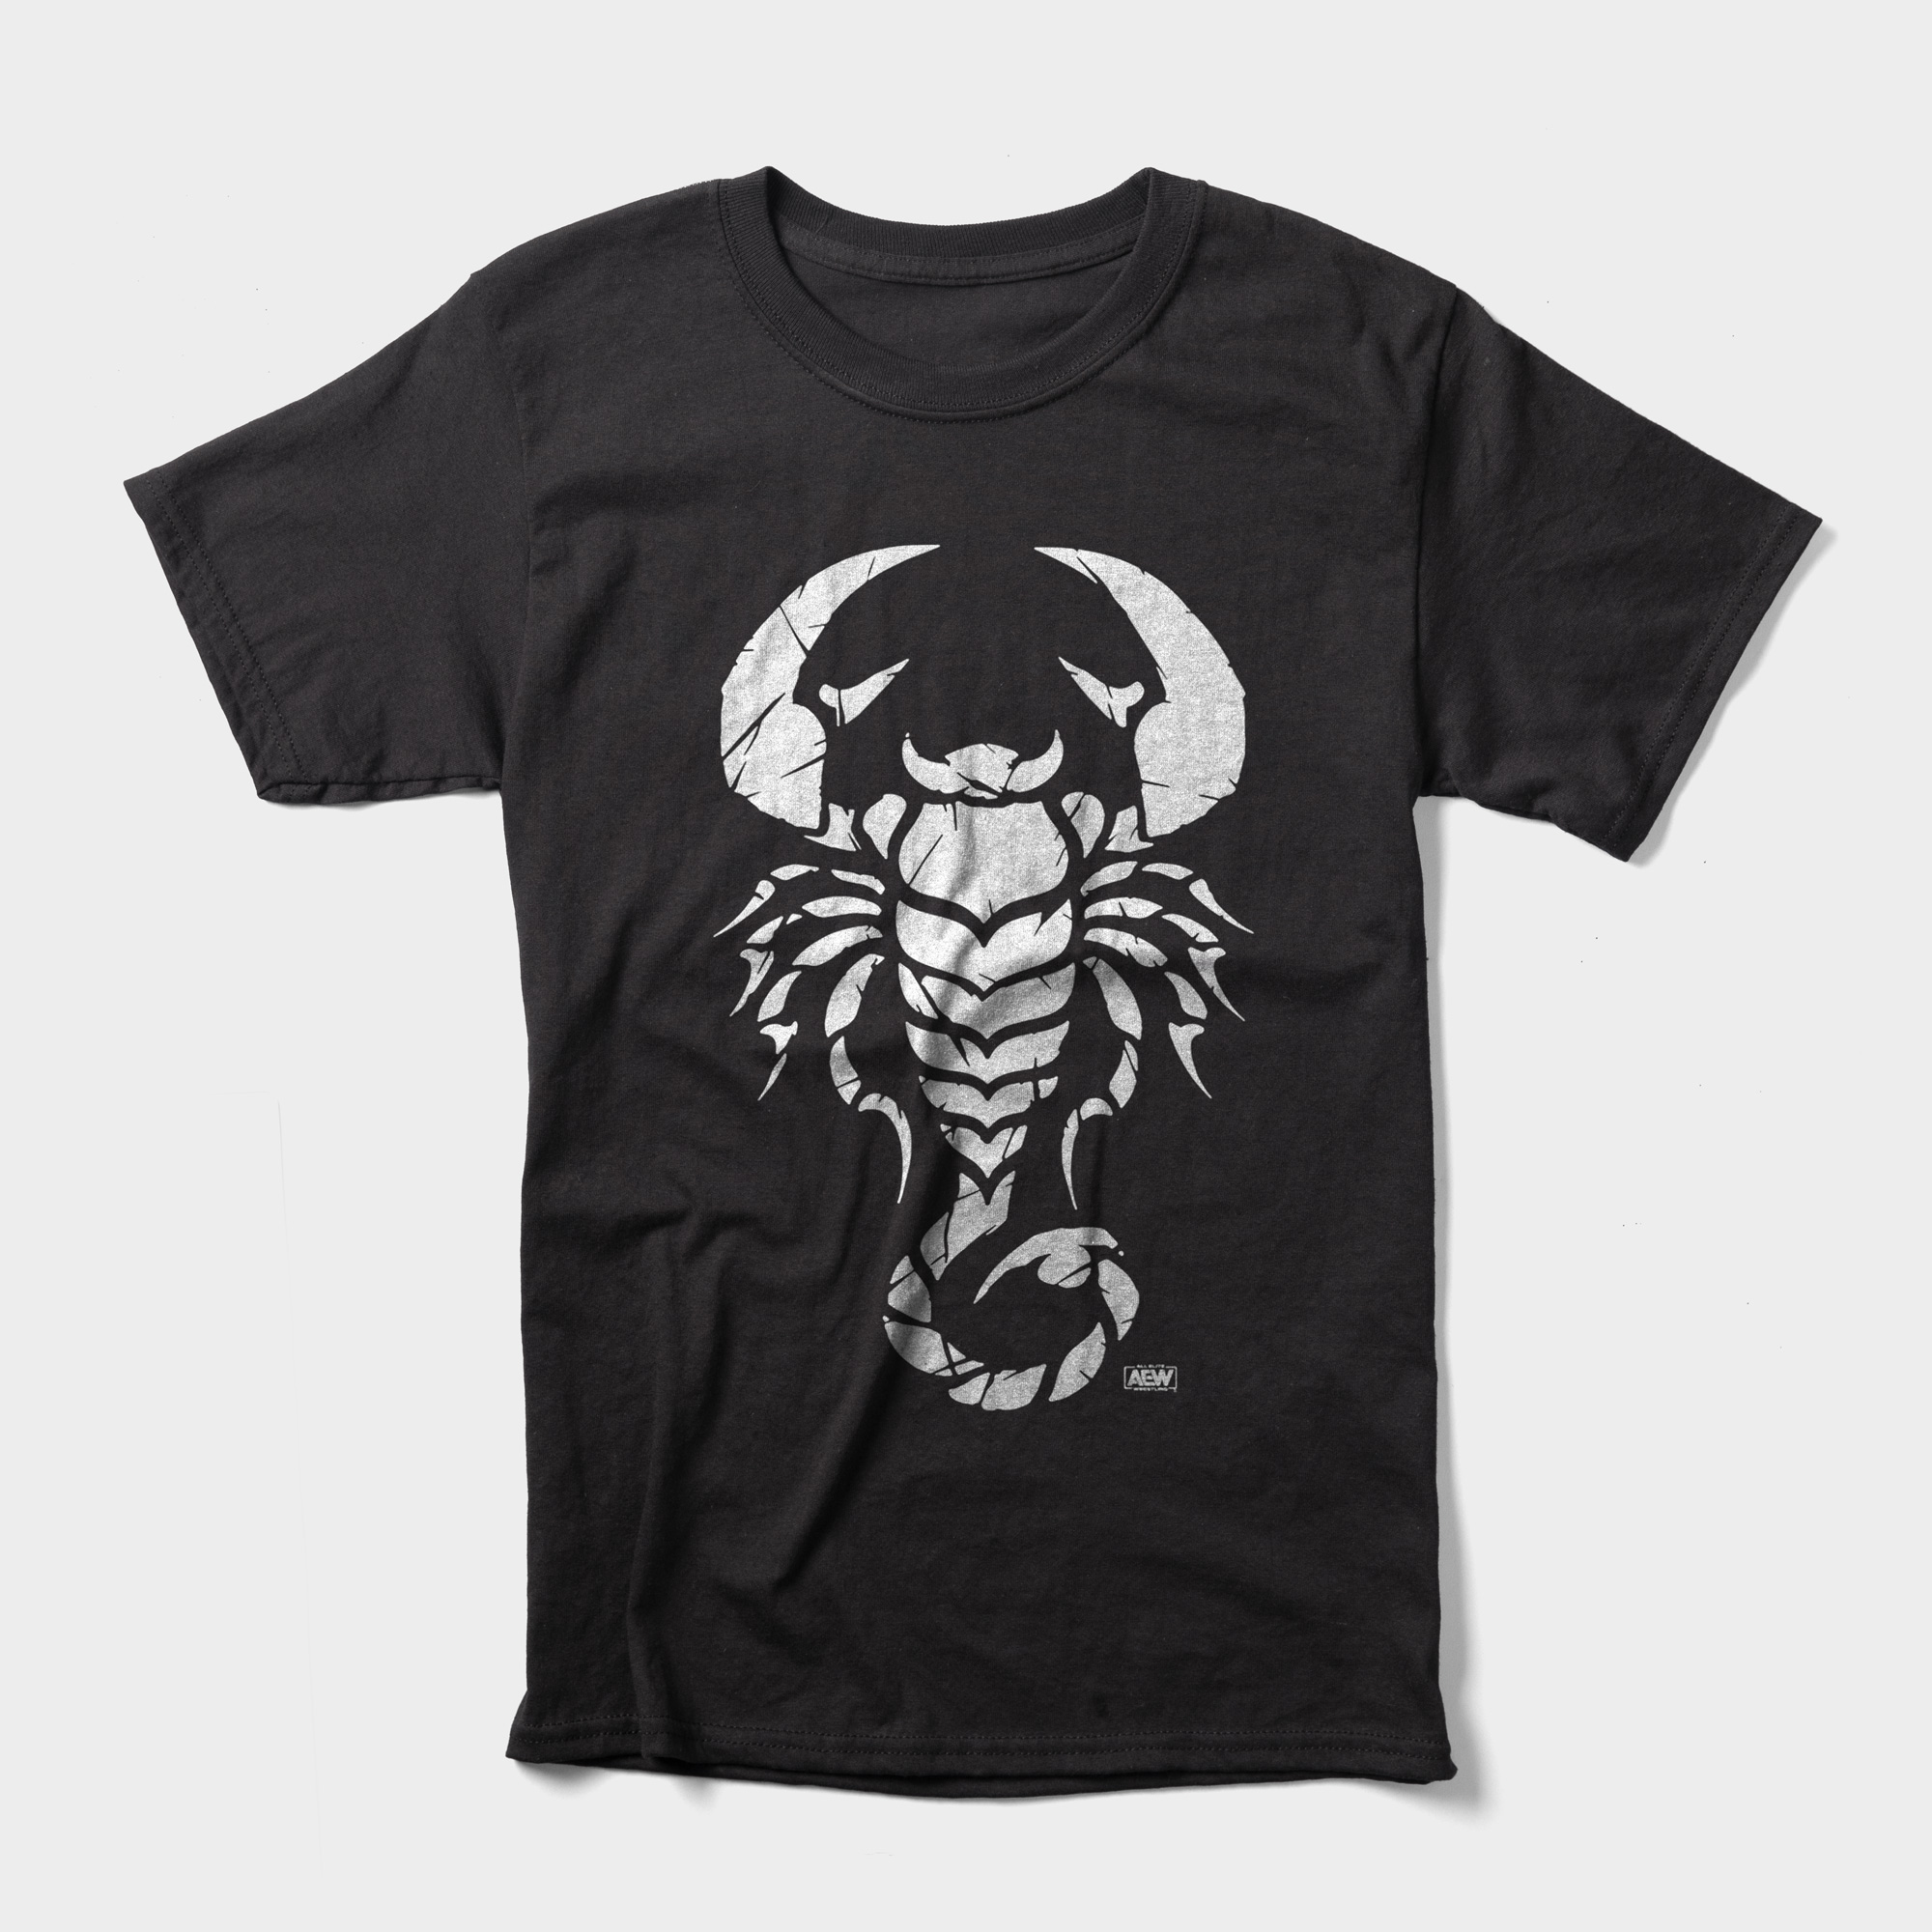 Sting's Scorpion emblem is minimal but memorable. 